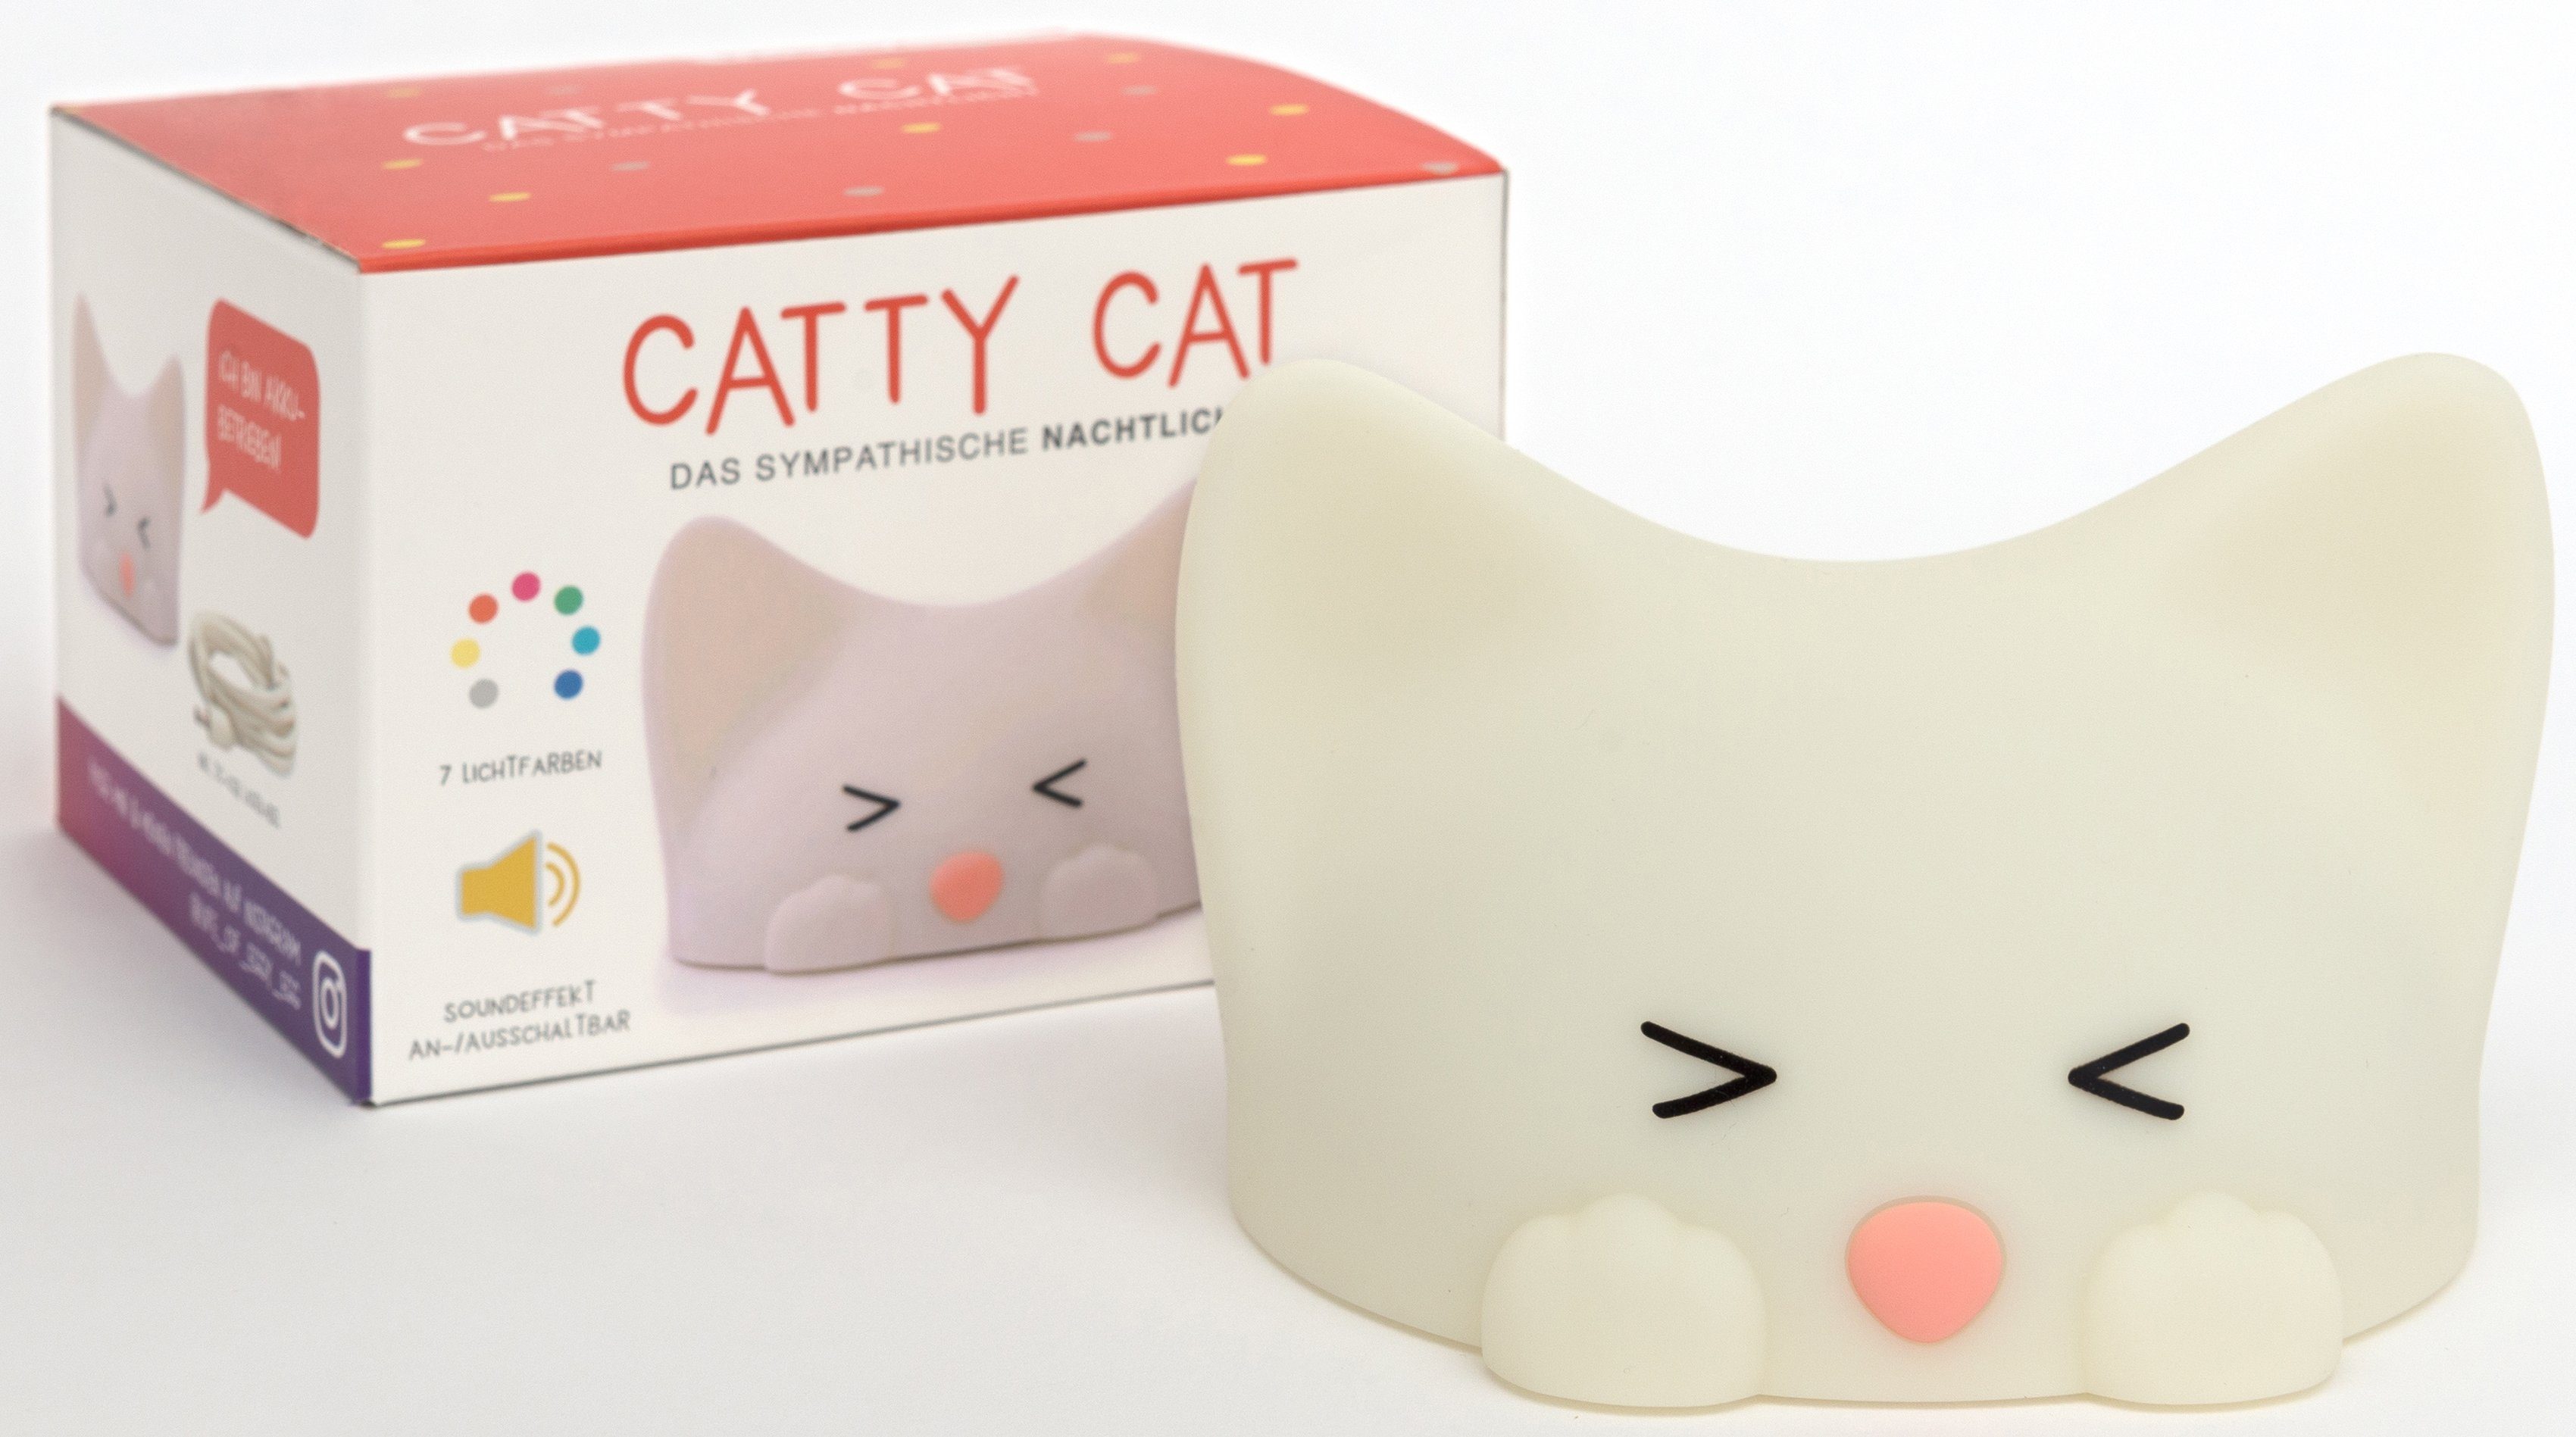 Cat, Nachtlicht LED LED niermann fest Catty integriert, Nachtlicht Cat Catty